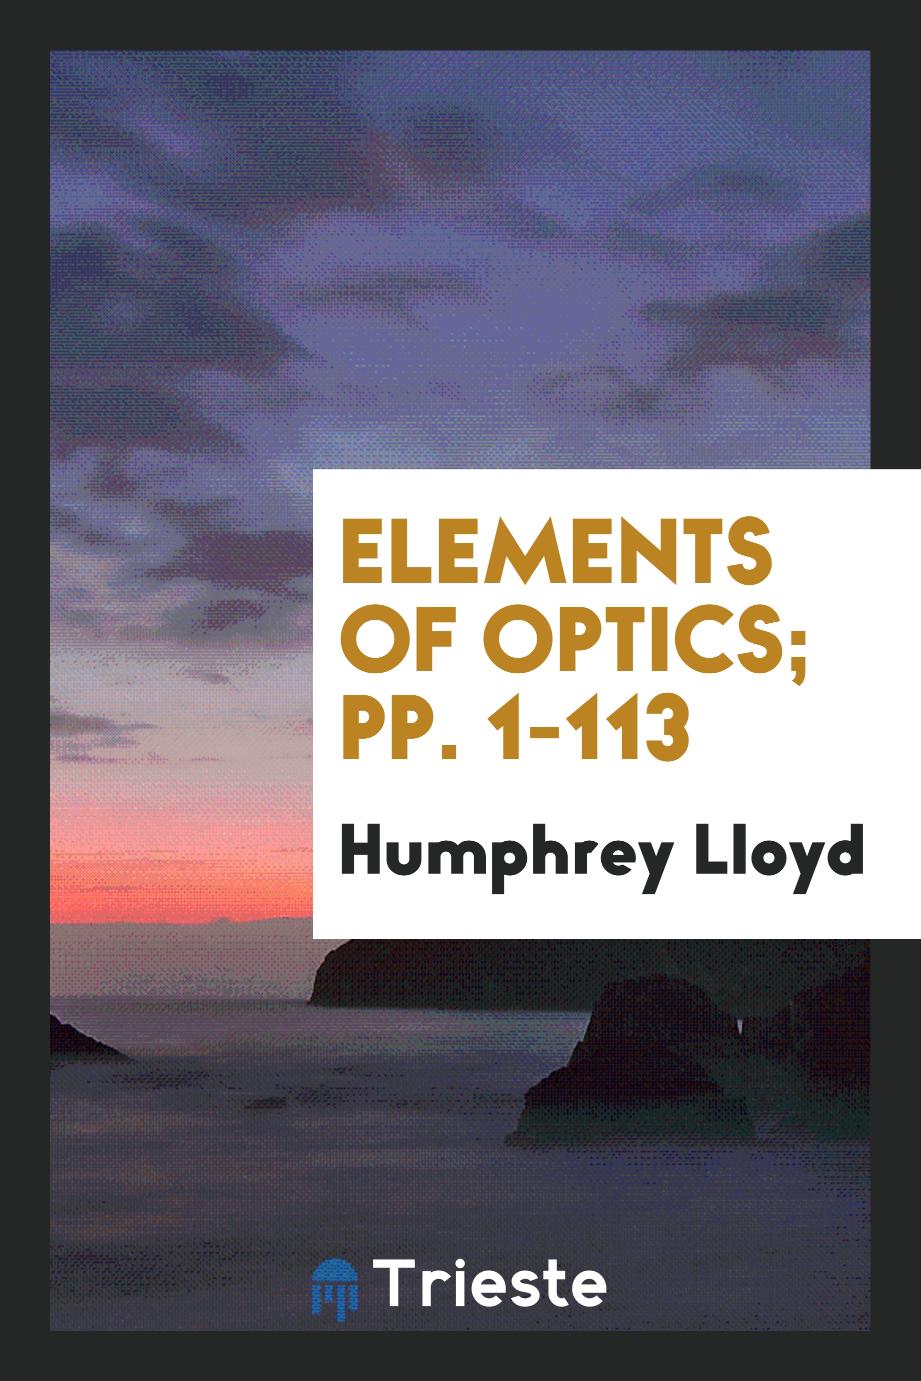 Elements of Optics; pp. 1-113